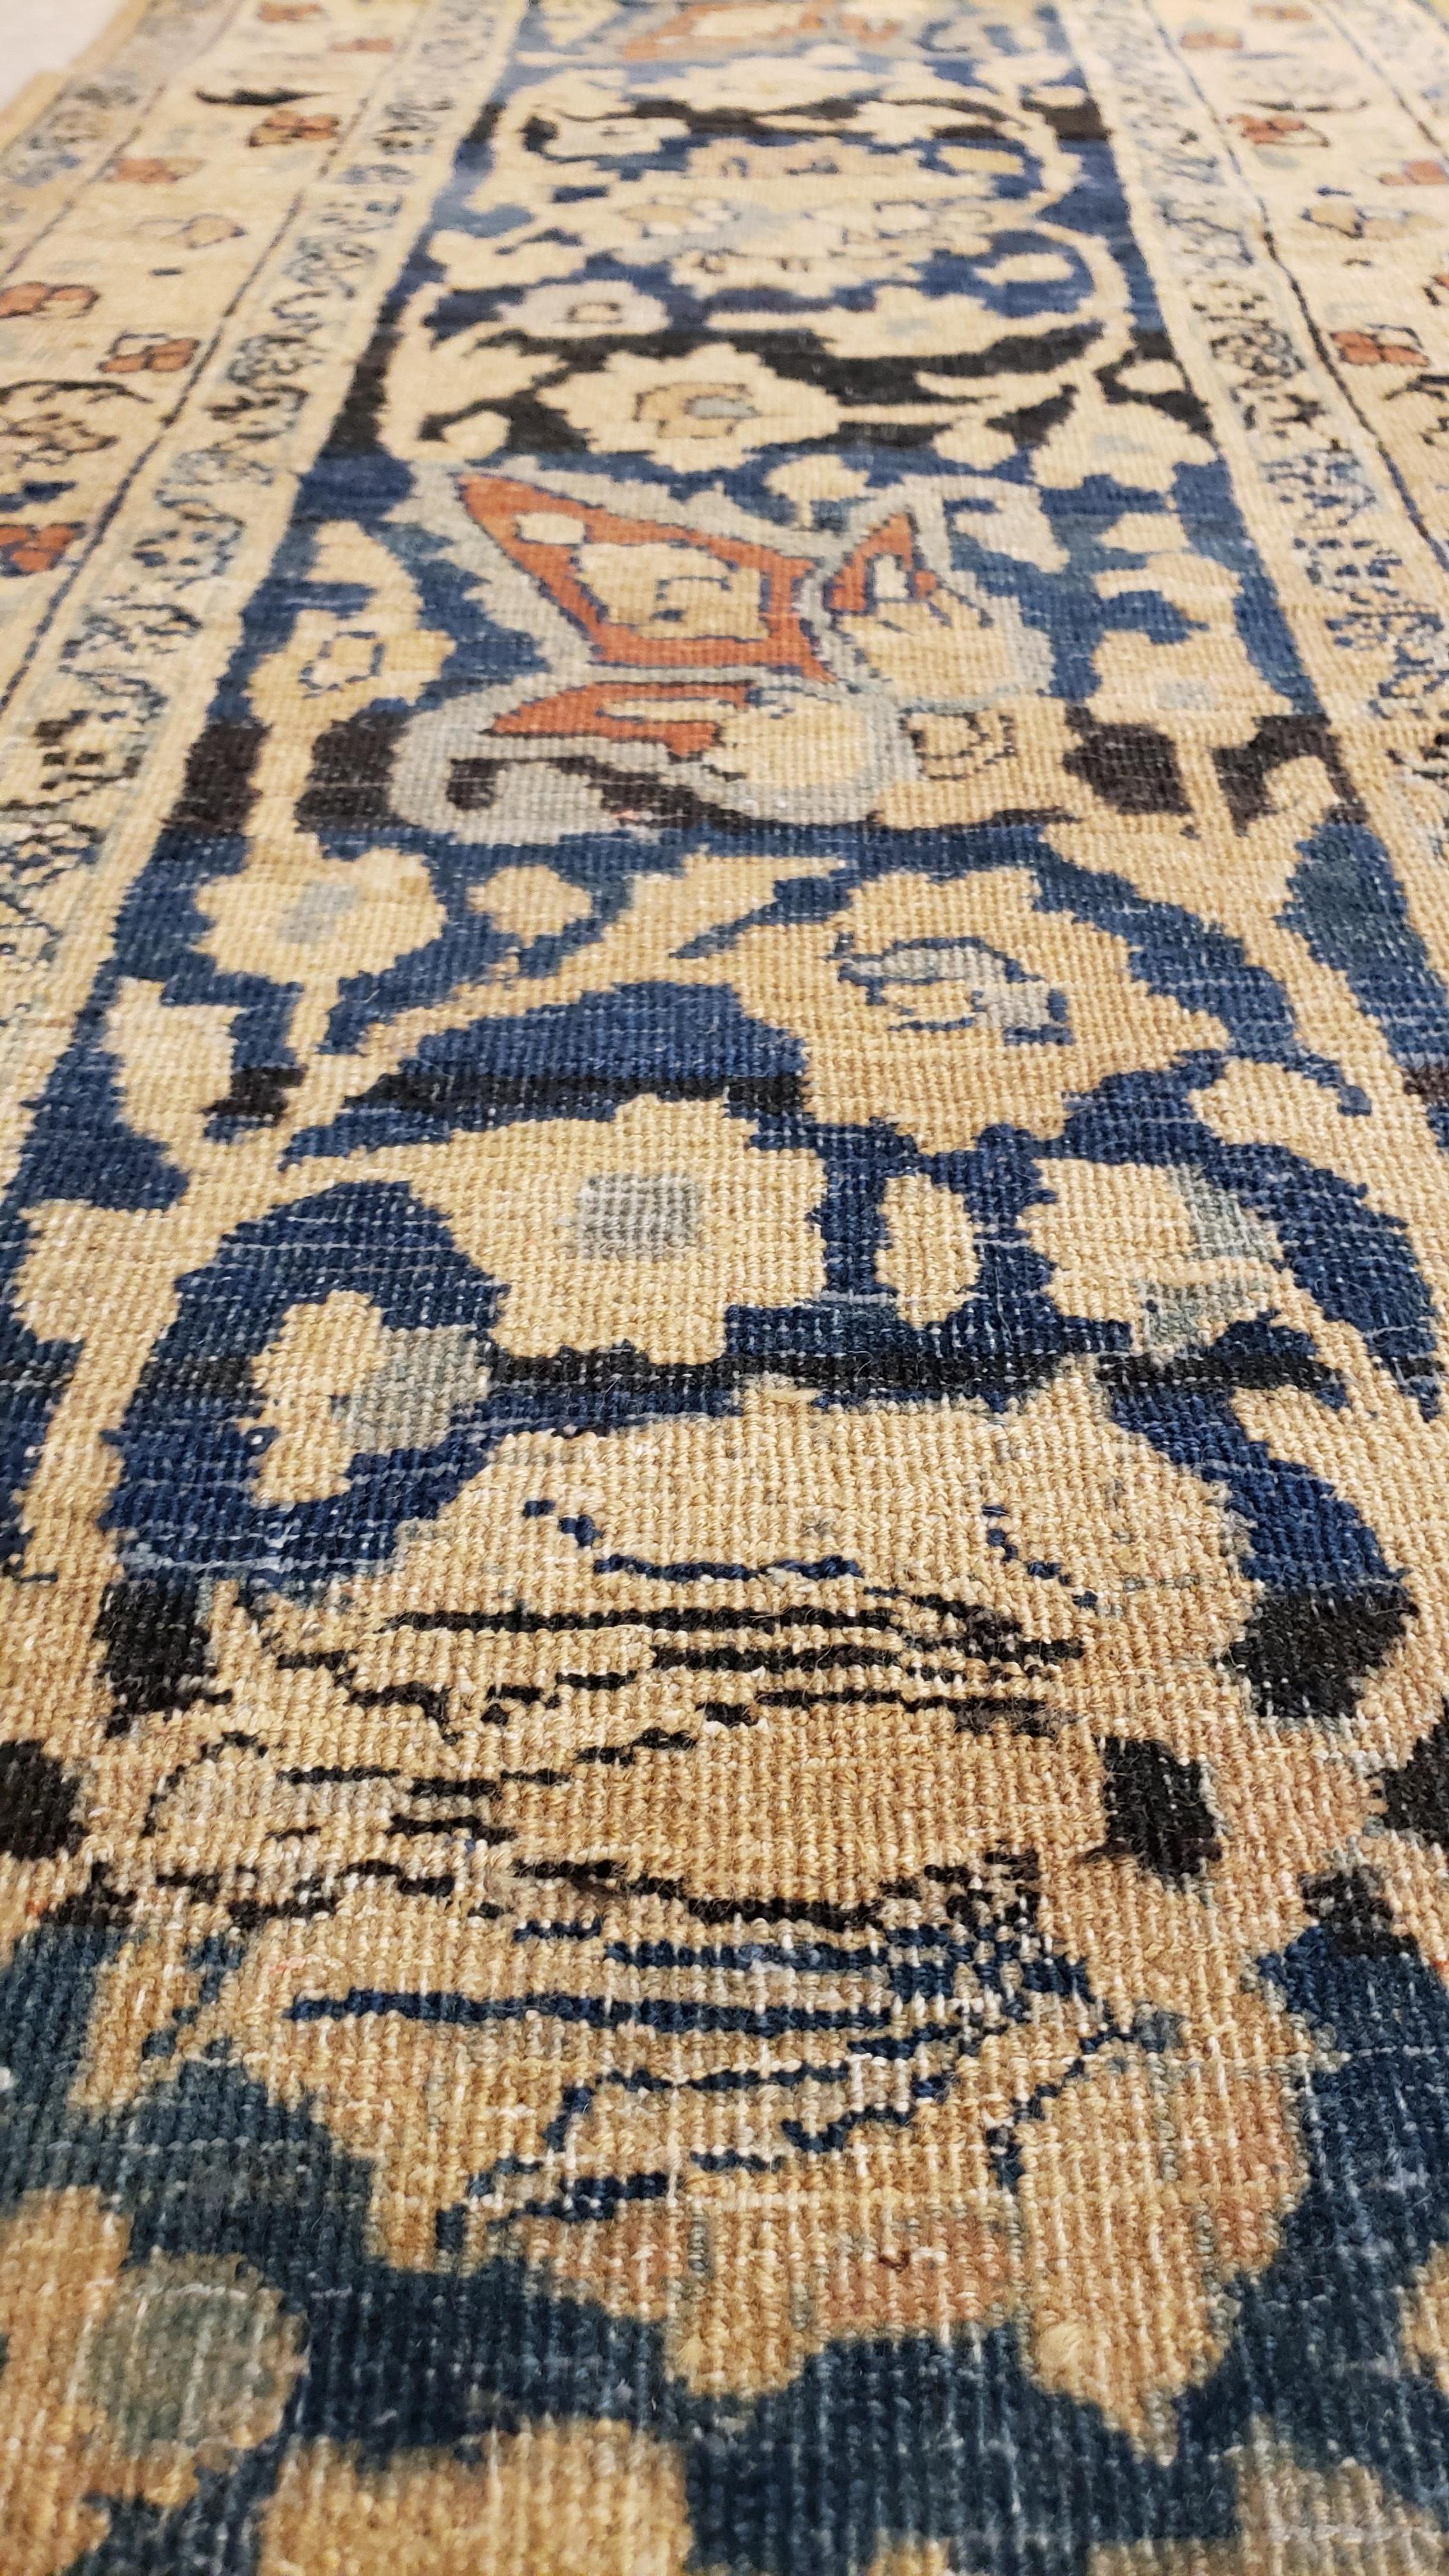 Antique Tabriz Fine Carpet, Handmade Persian Rug in Blue, Taupe, Soft Caramel For Sale 1